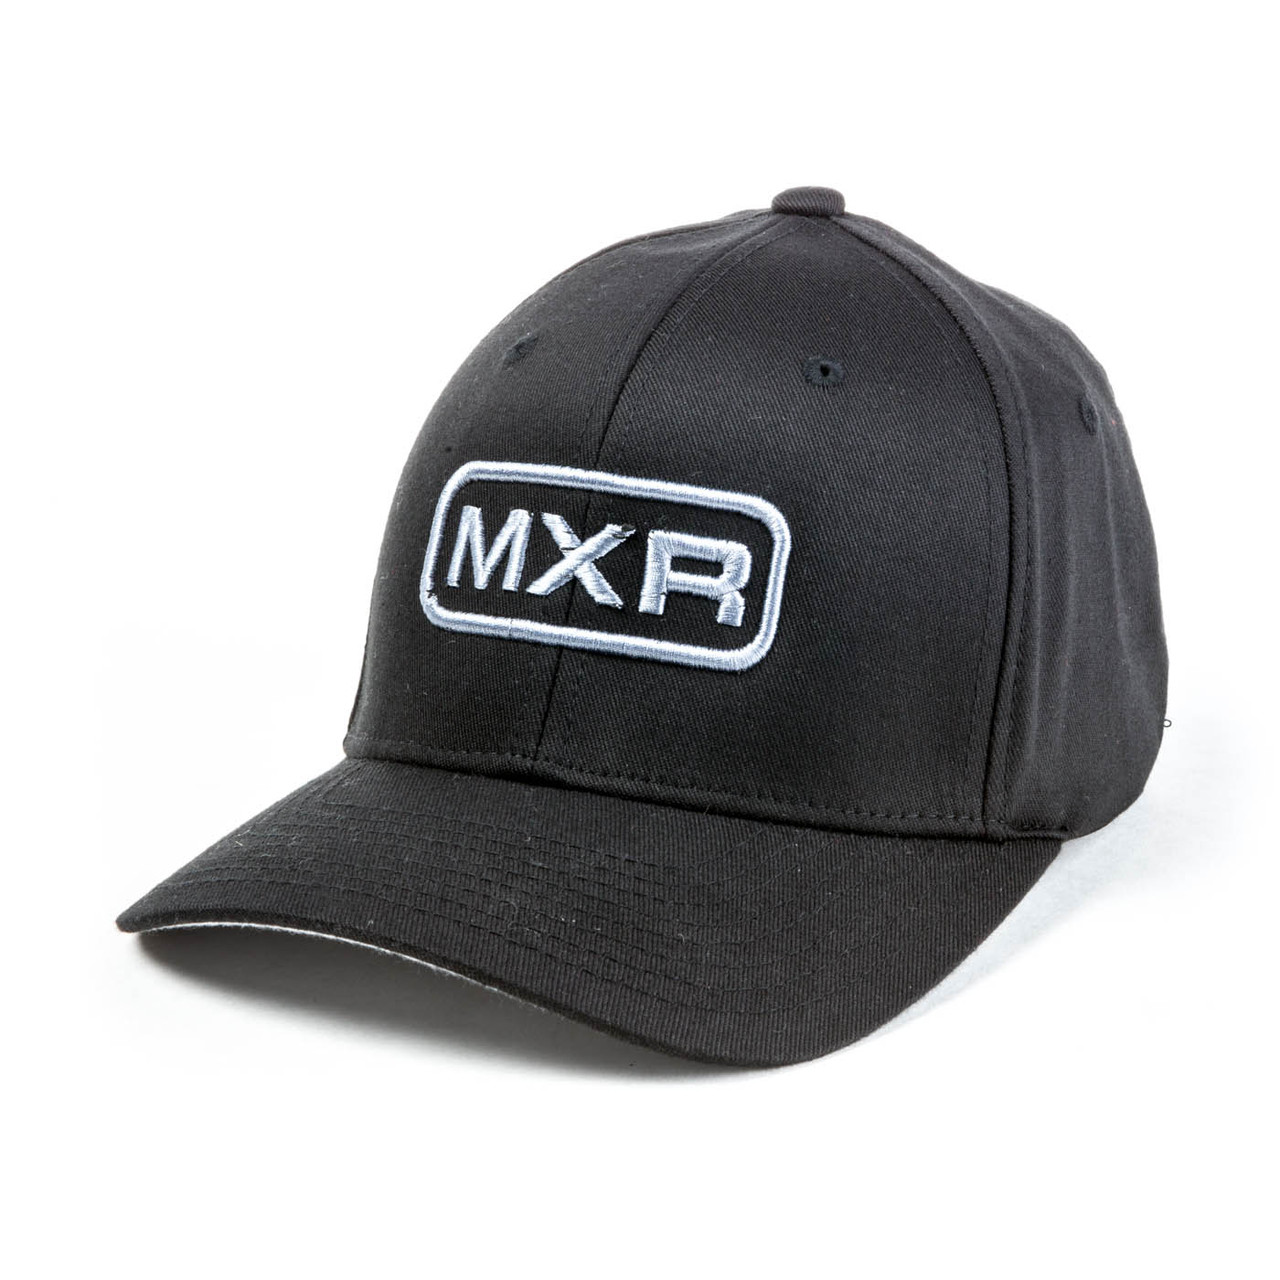 MXR® FLEXI FIT CAP - Dunlop